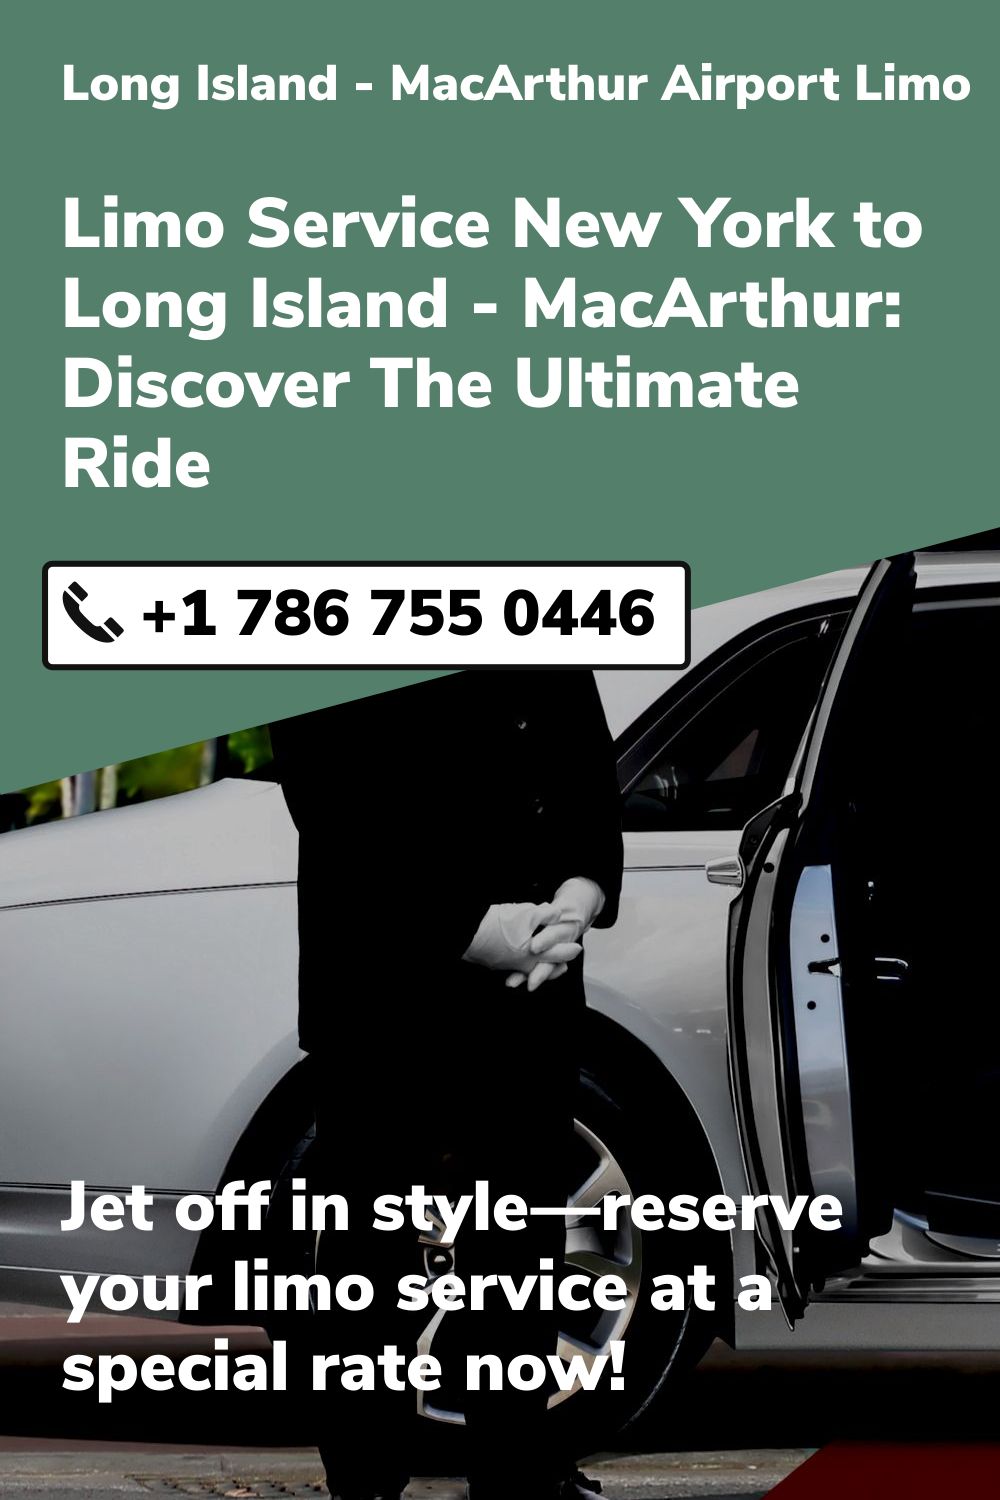 Long Island - MacArthur Airport Limo